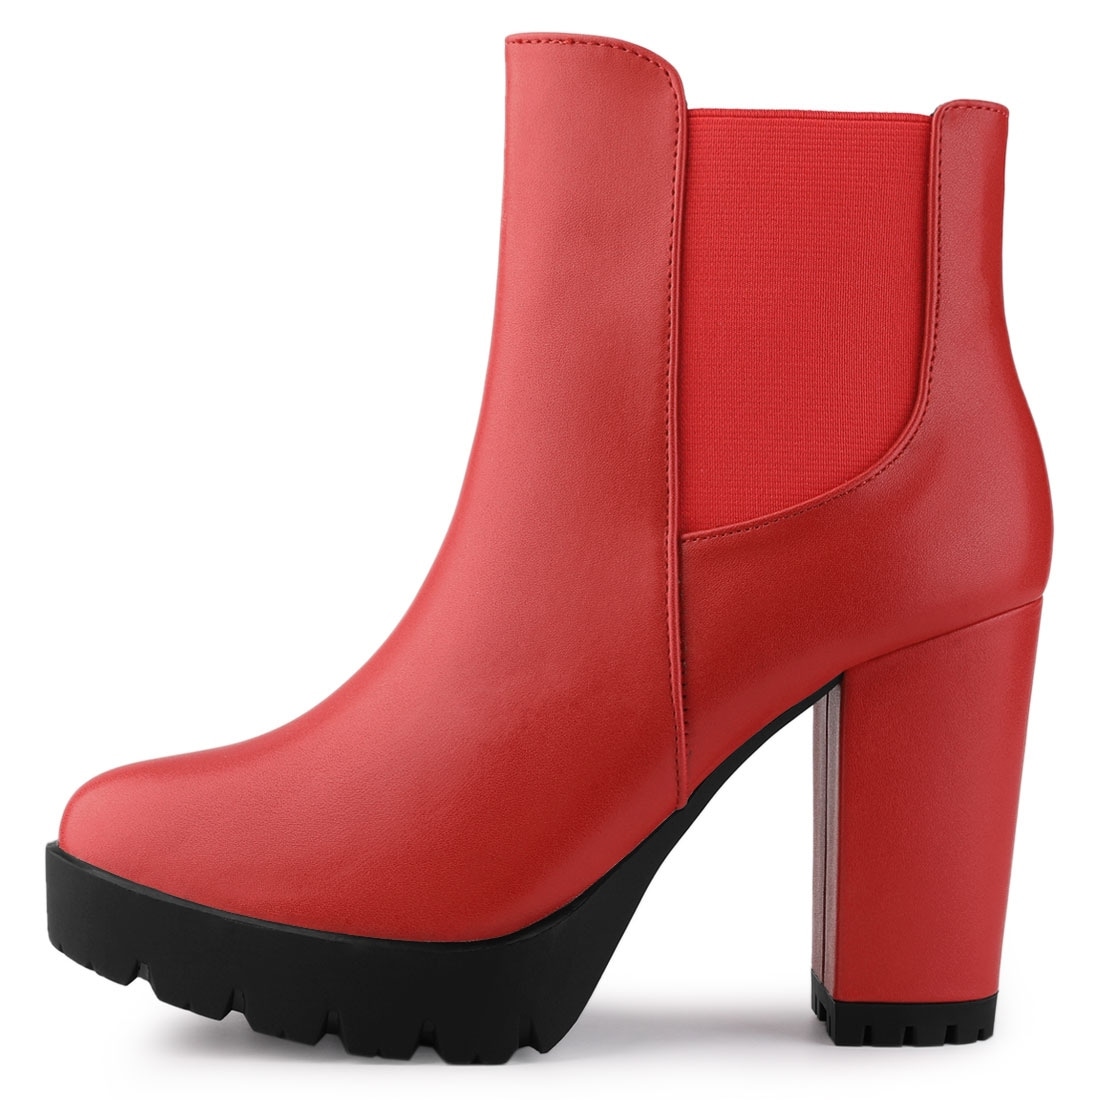 Details about  / Fur Trim Women Ankle Boots Warm Lined Buckle Low Heel Round Toe Pumps Plus Size